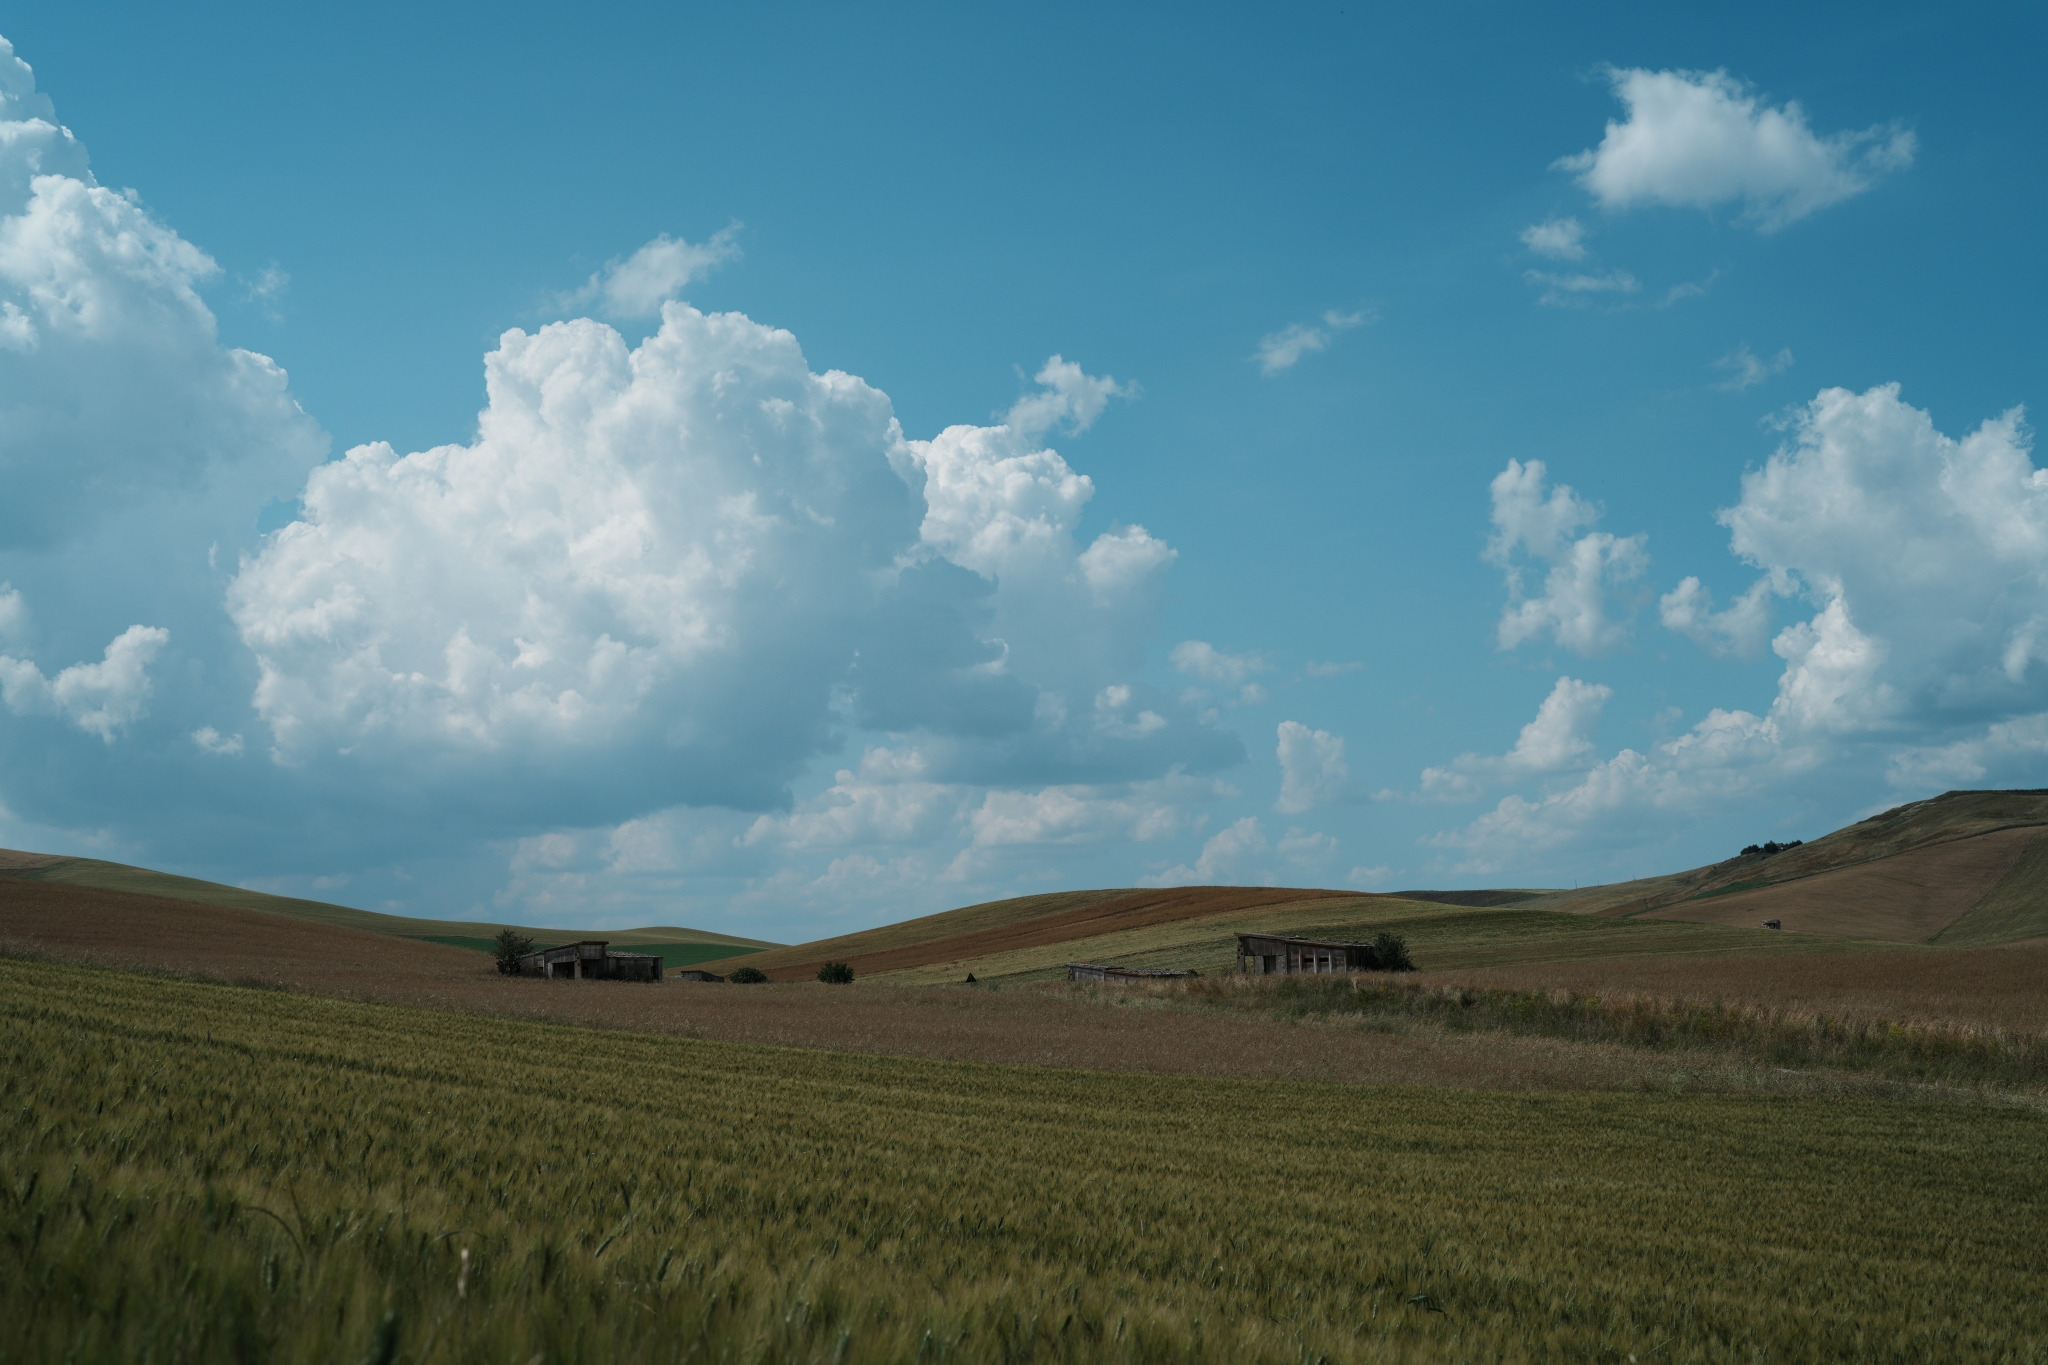 Landscape of grassy fields with blue sky